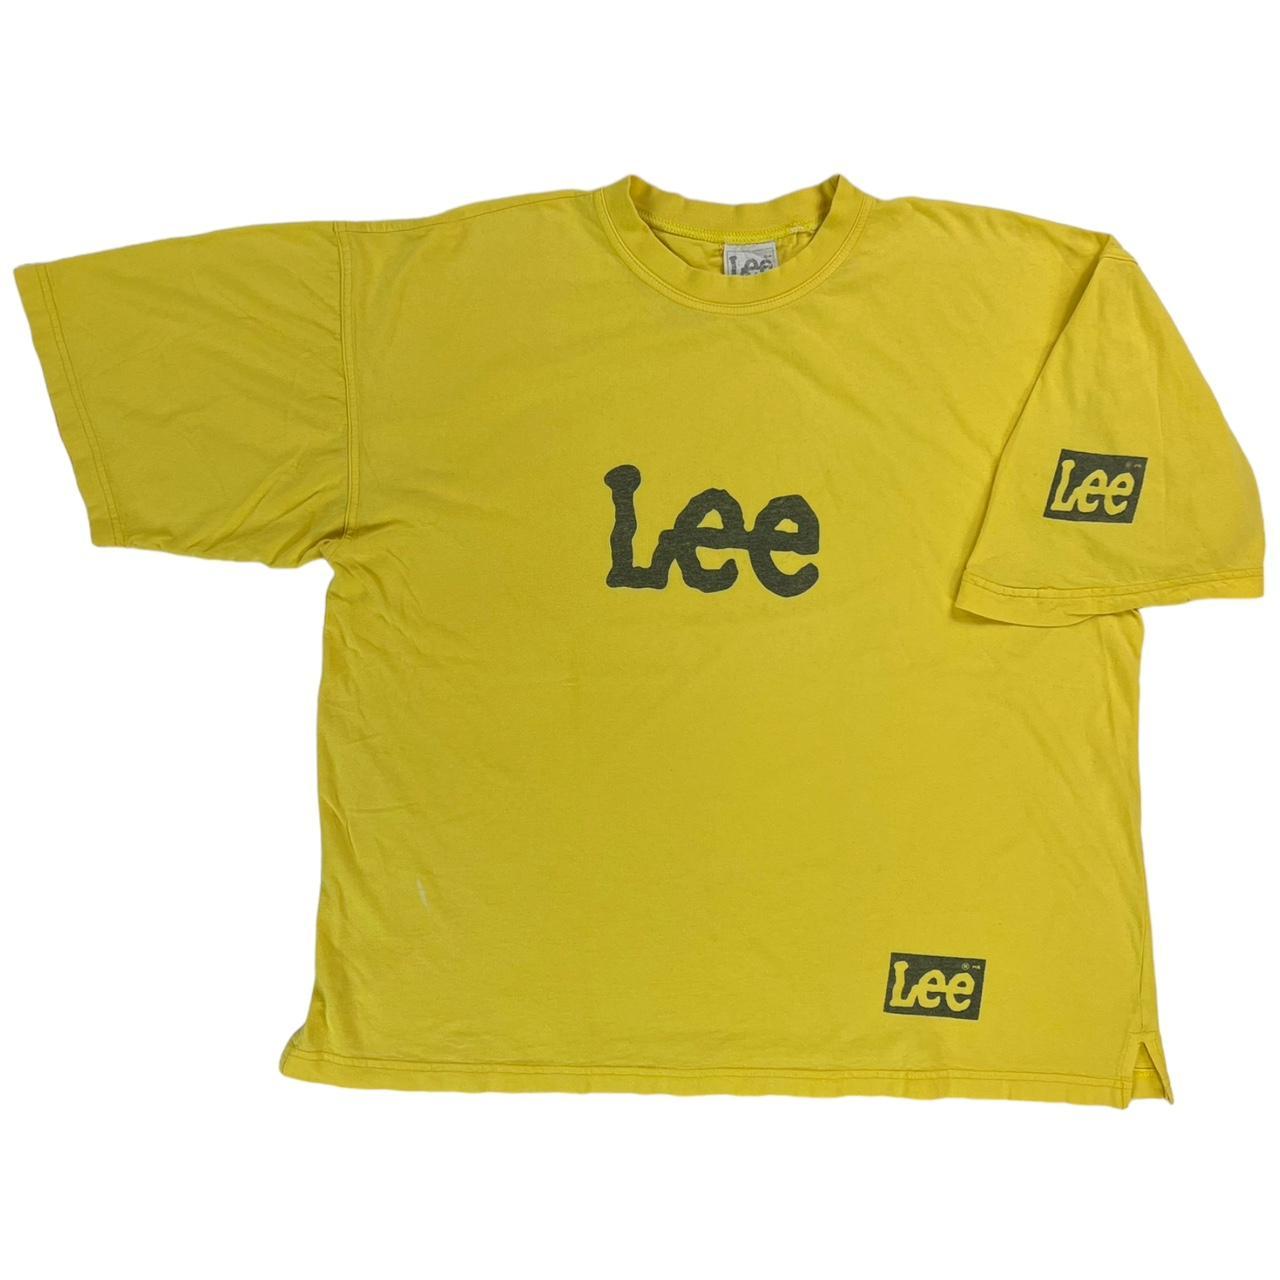 Lee Men's Yellow and Black T-shirt | Depop